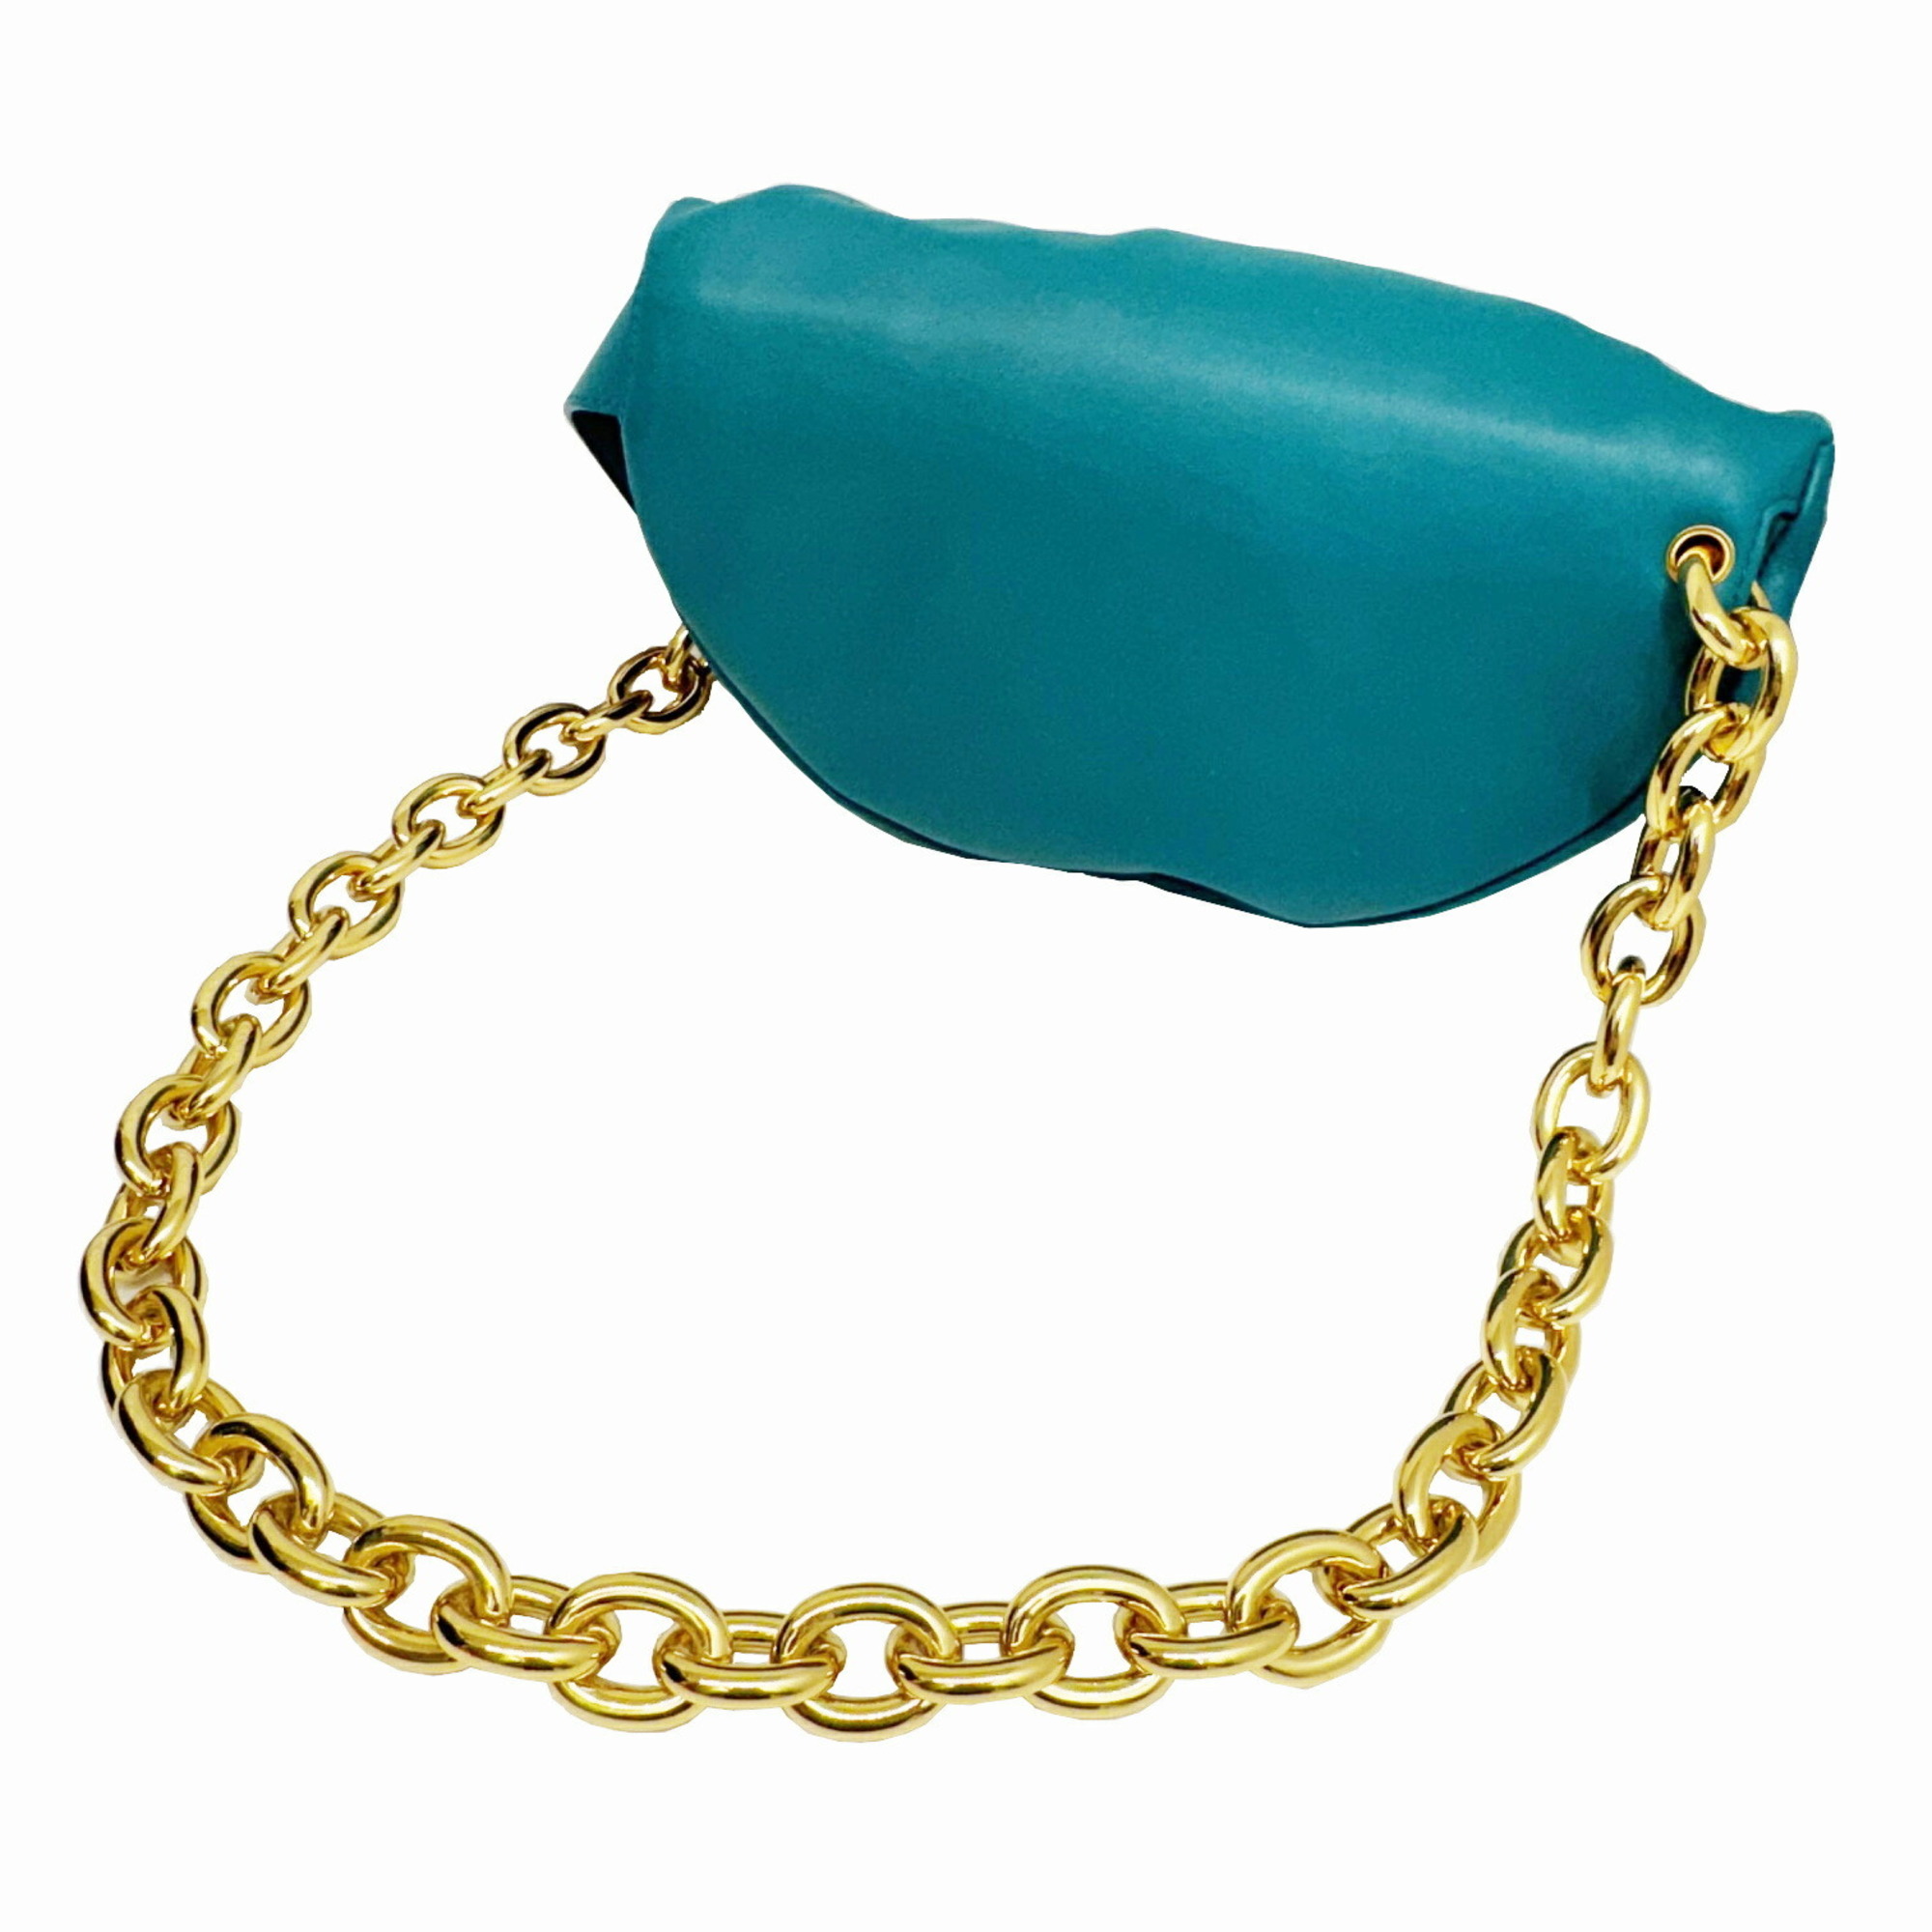 Bottega Veneta The Chain Pouch Calf Leather 651445 Shoulder Bag Blue Green Ladies